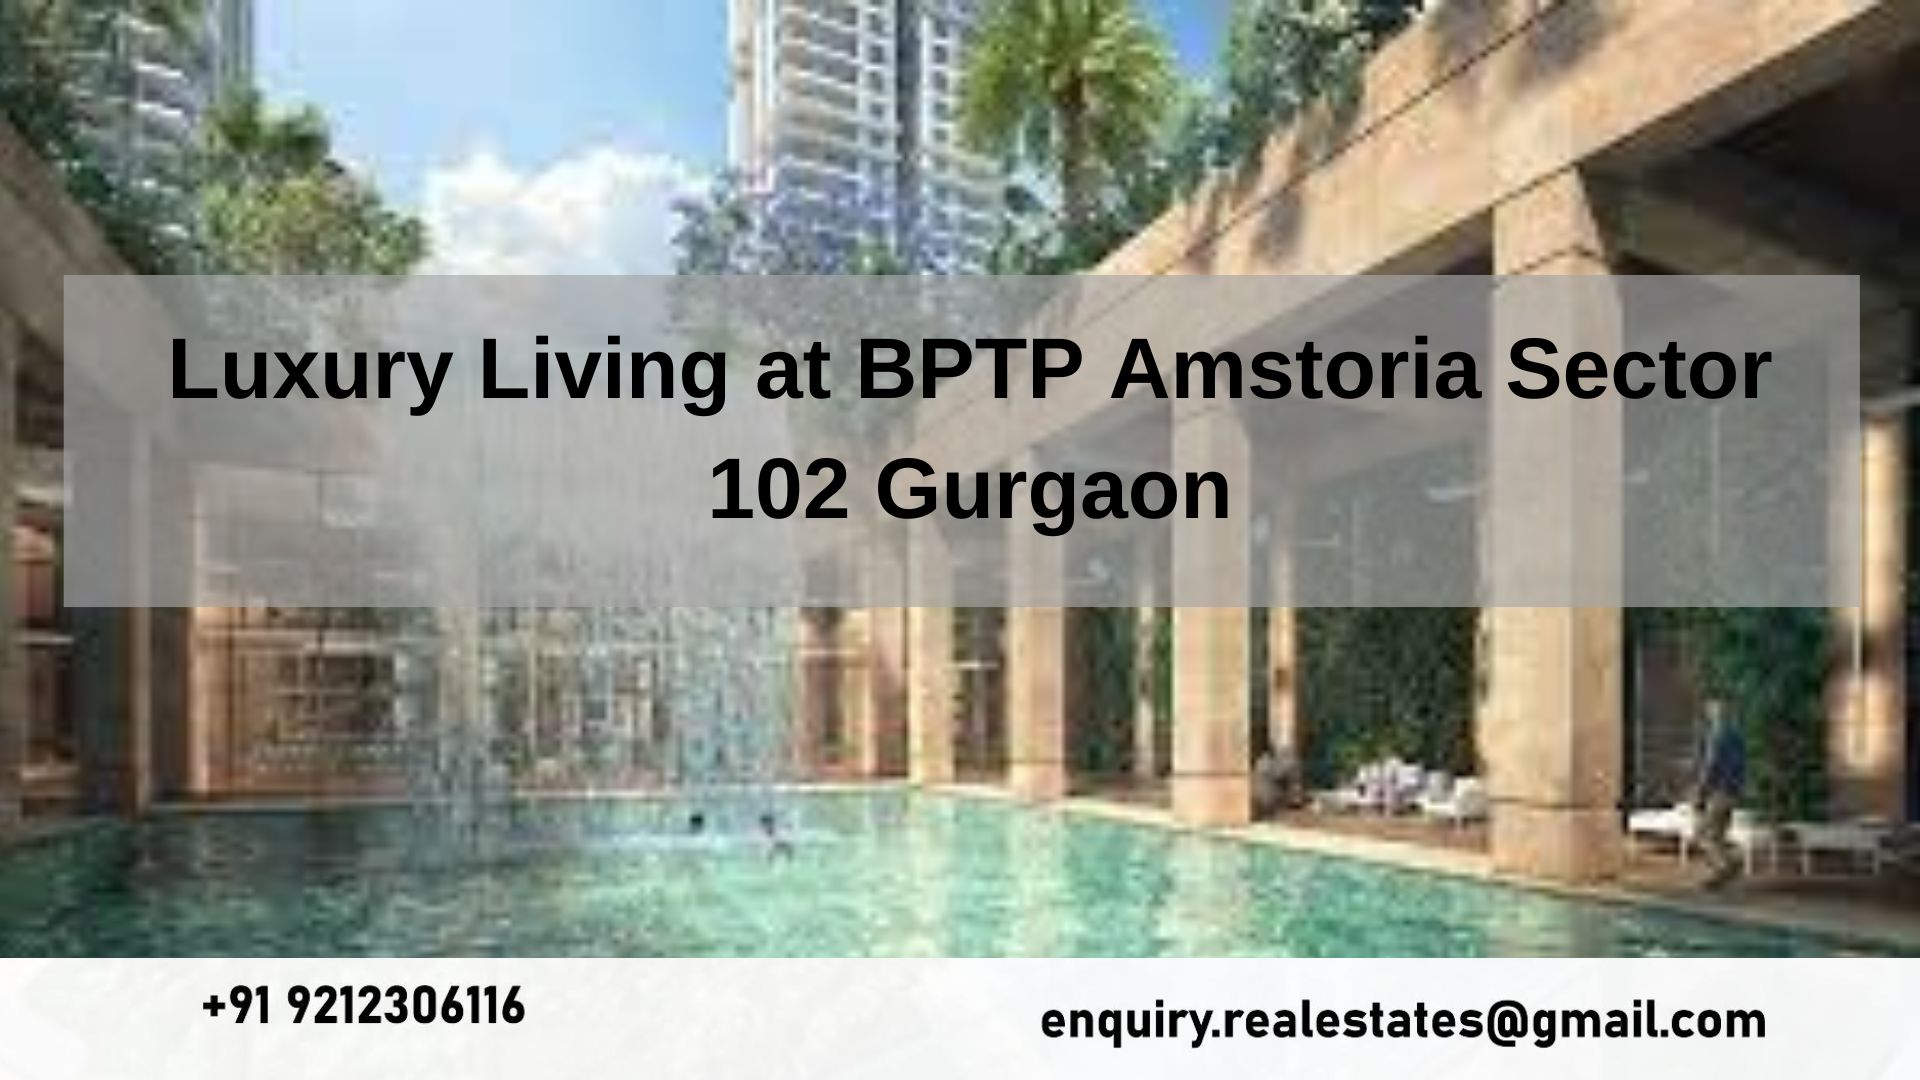 Luxury Living at BPTP Amstoria Sector 102 Gurgaon